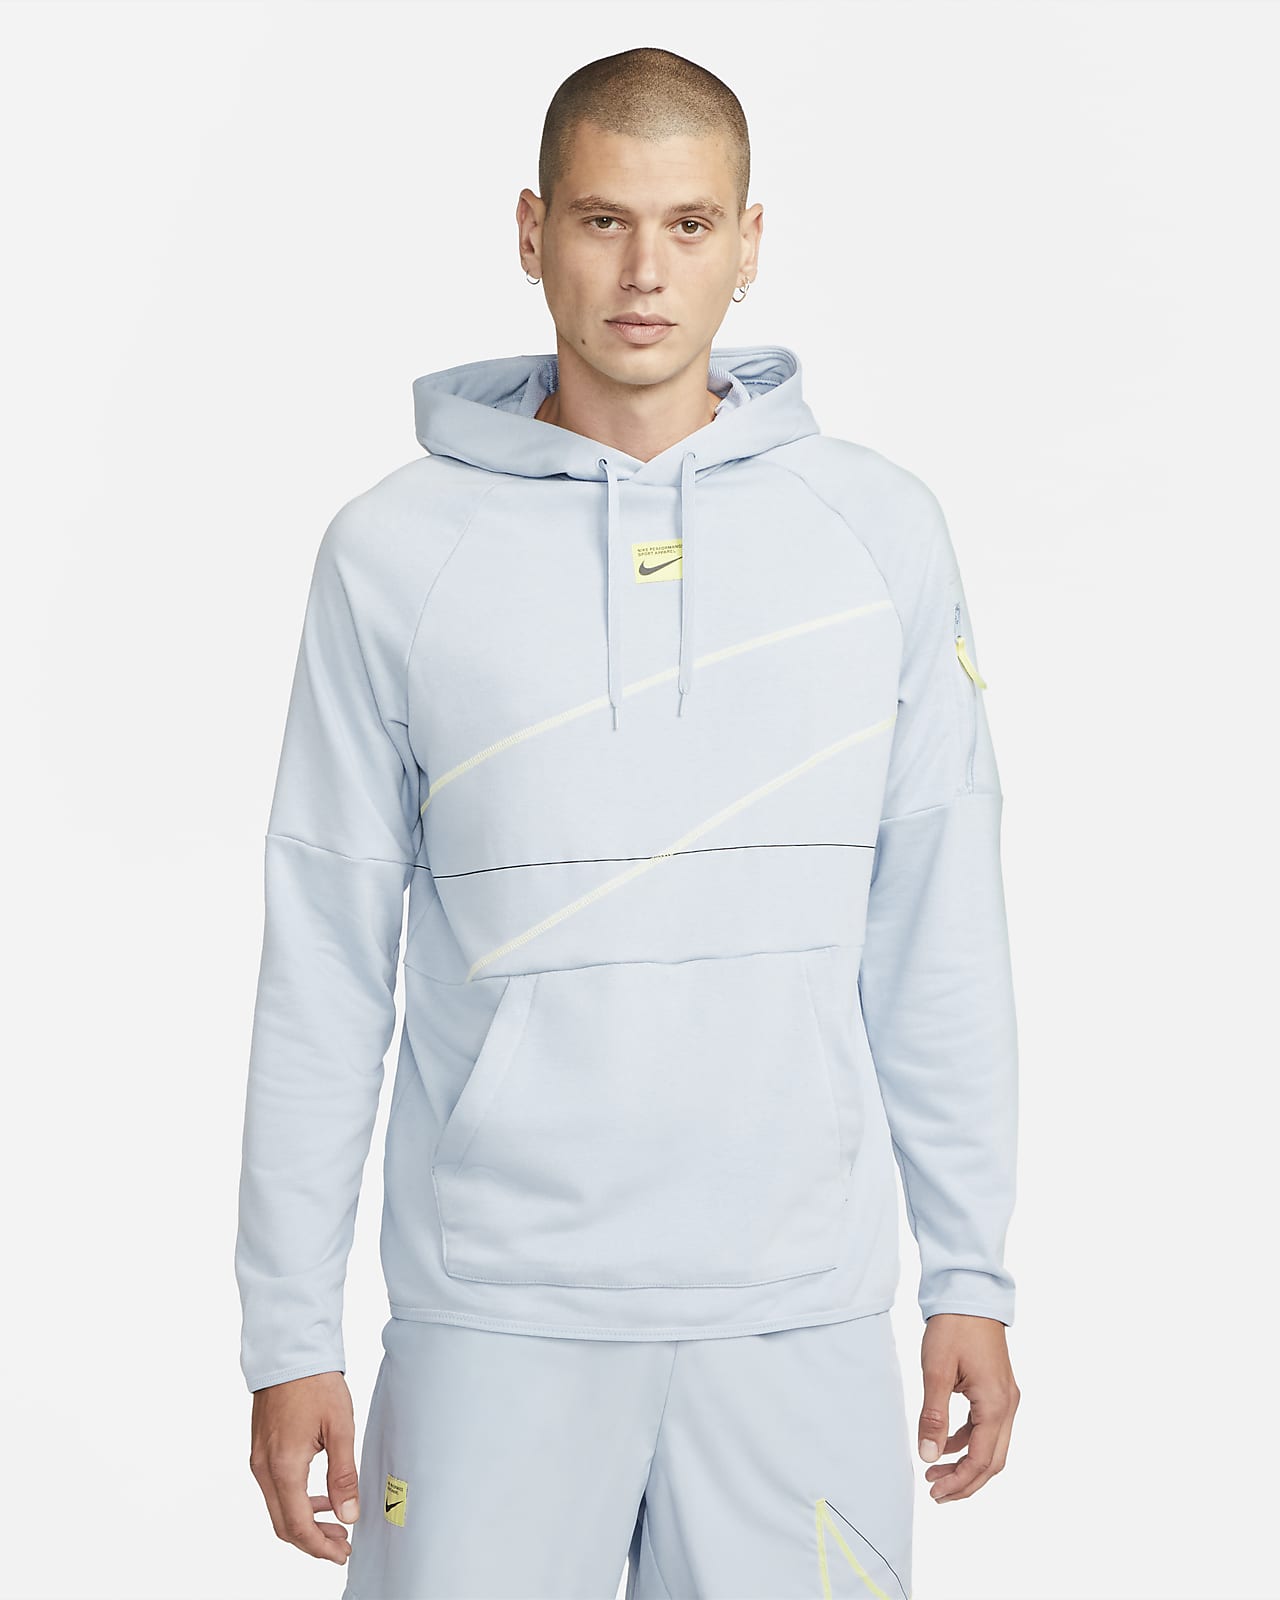 Nike Dri-FIT Men\'s Fleece Fitness Hoodie. Pullover